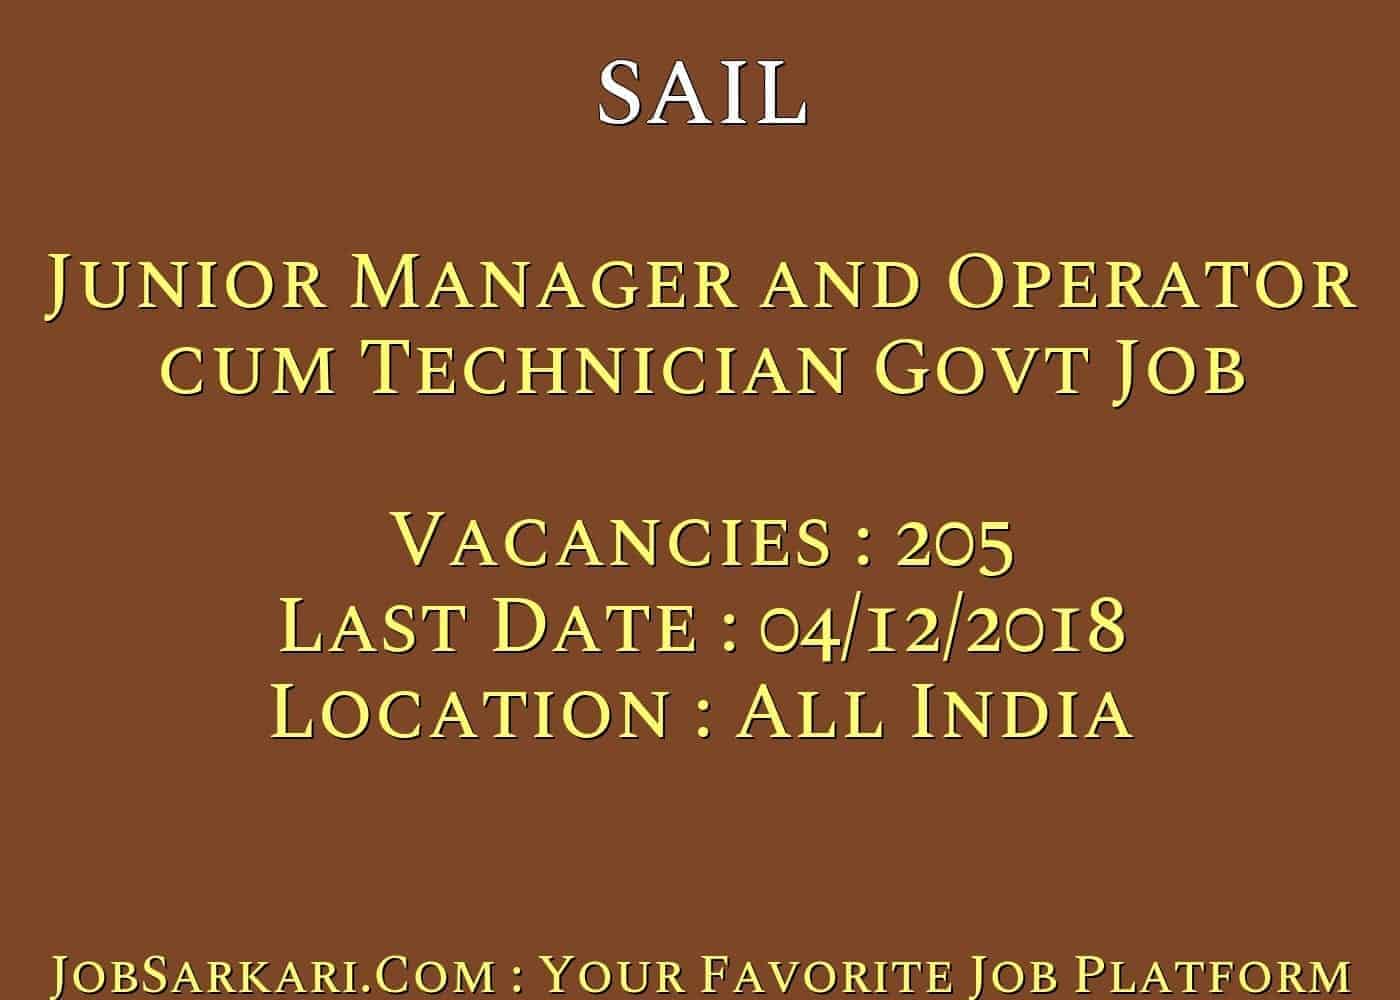 SAIL Recruitment 2018 for Junior Manager and Operator cum Technician Govt Job